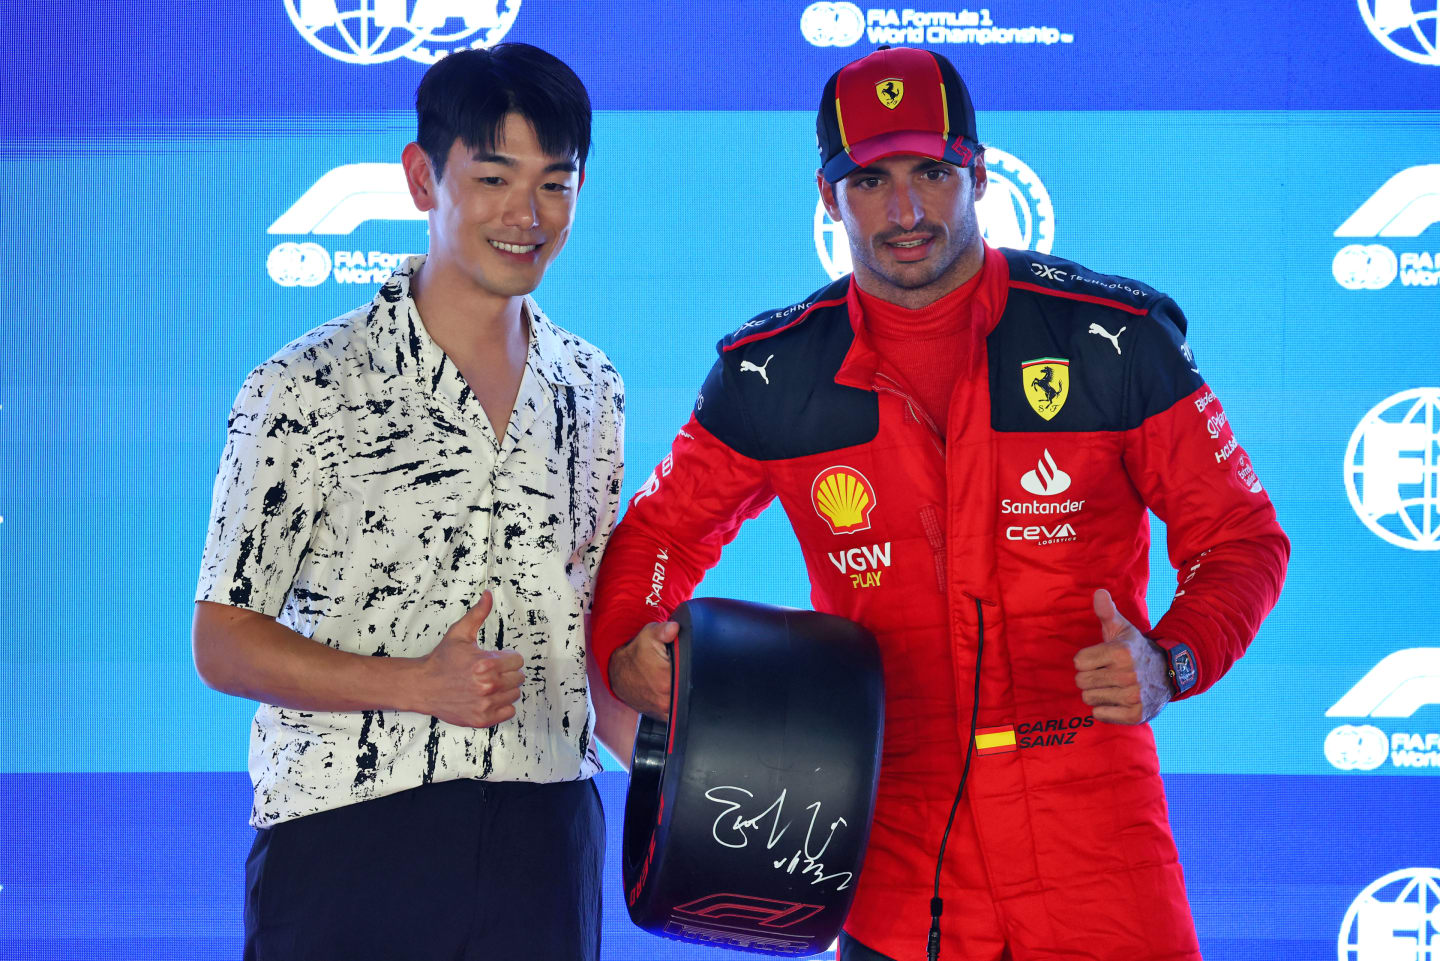 SINGAPORE, SINGAPORE - SEPTEMBER 16: Pole position qualifier Carlos Sainz of Spain and Ferrari is